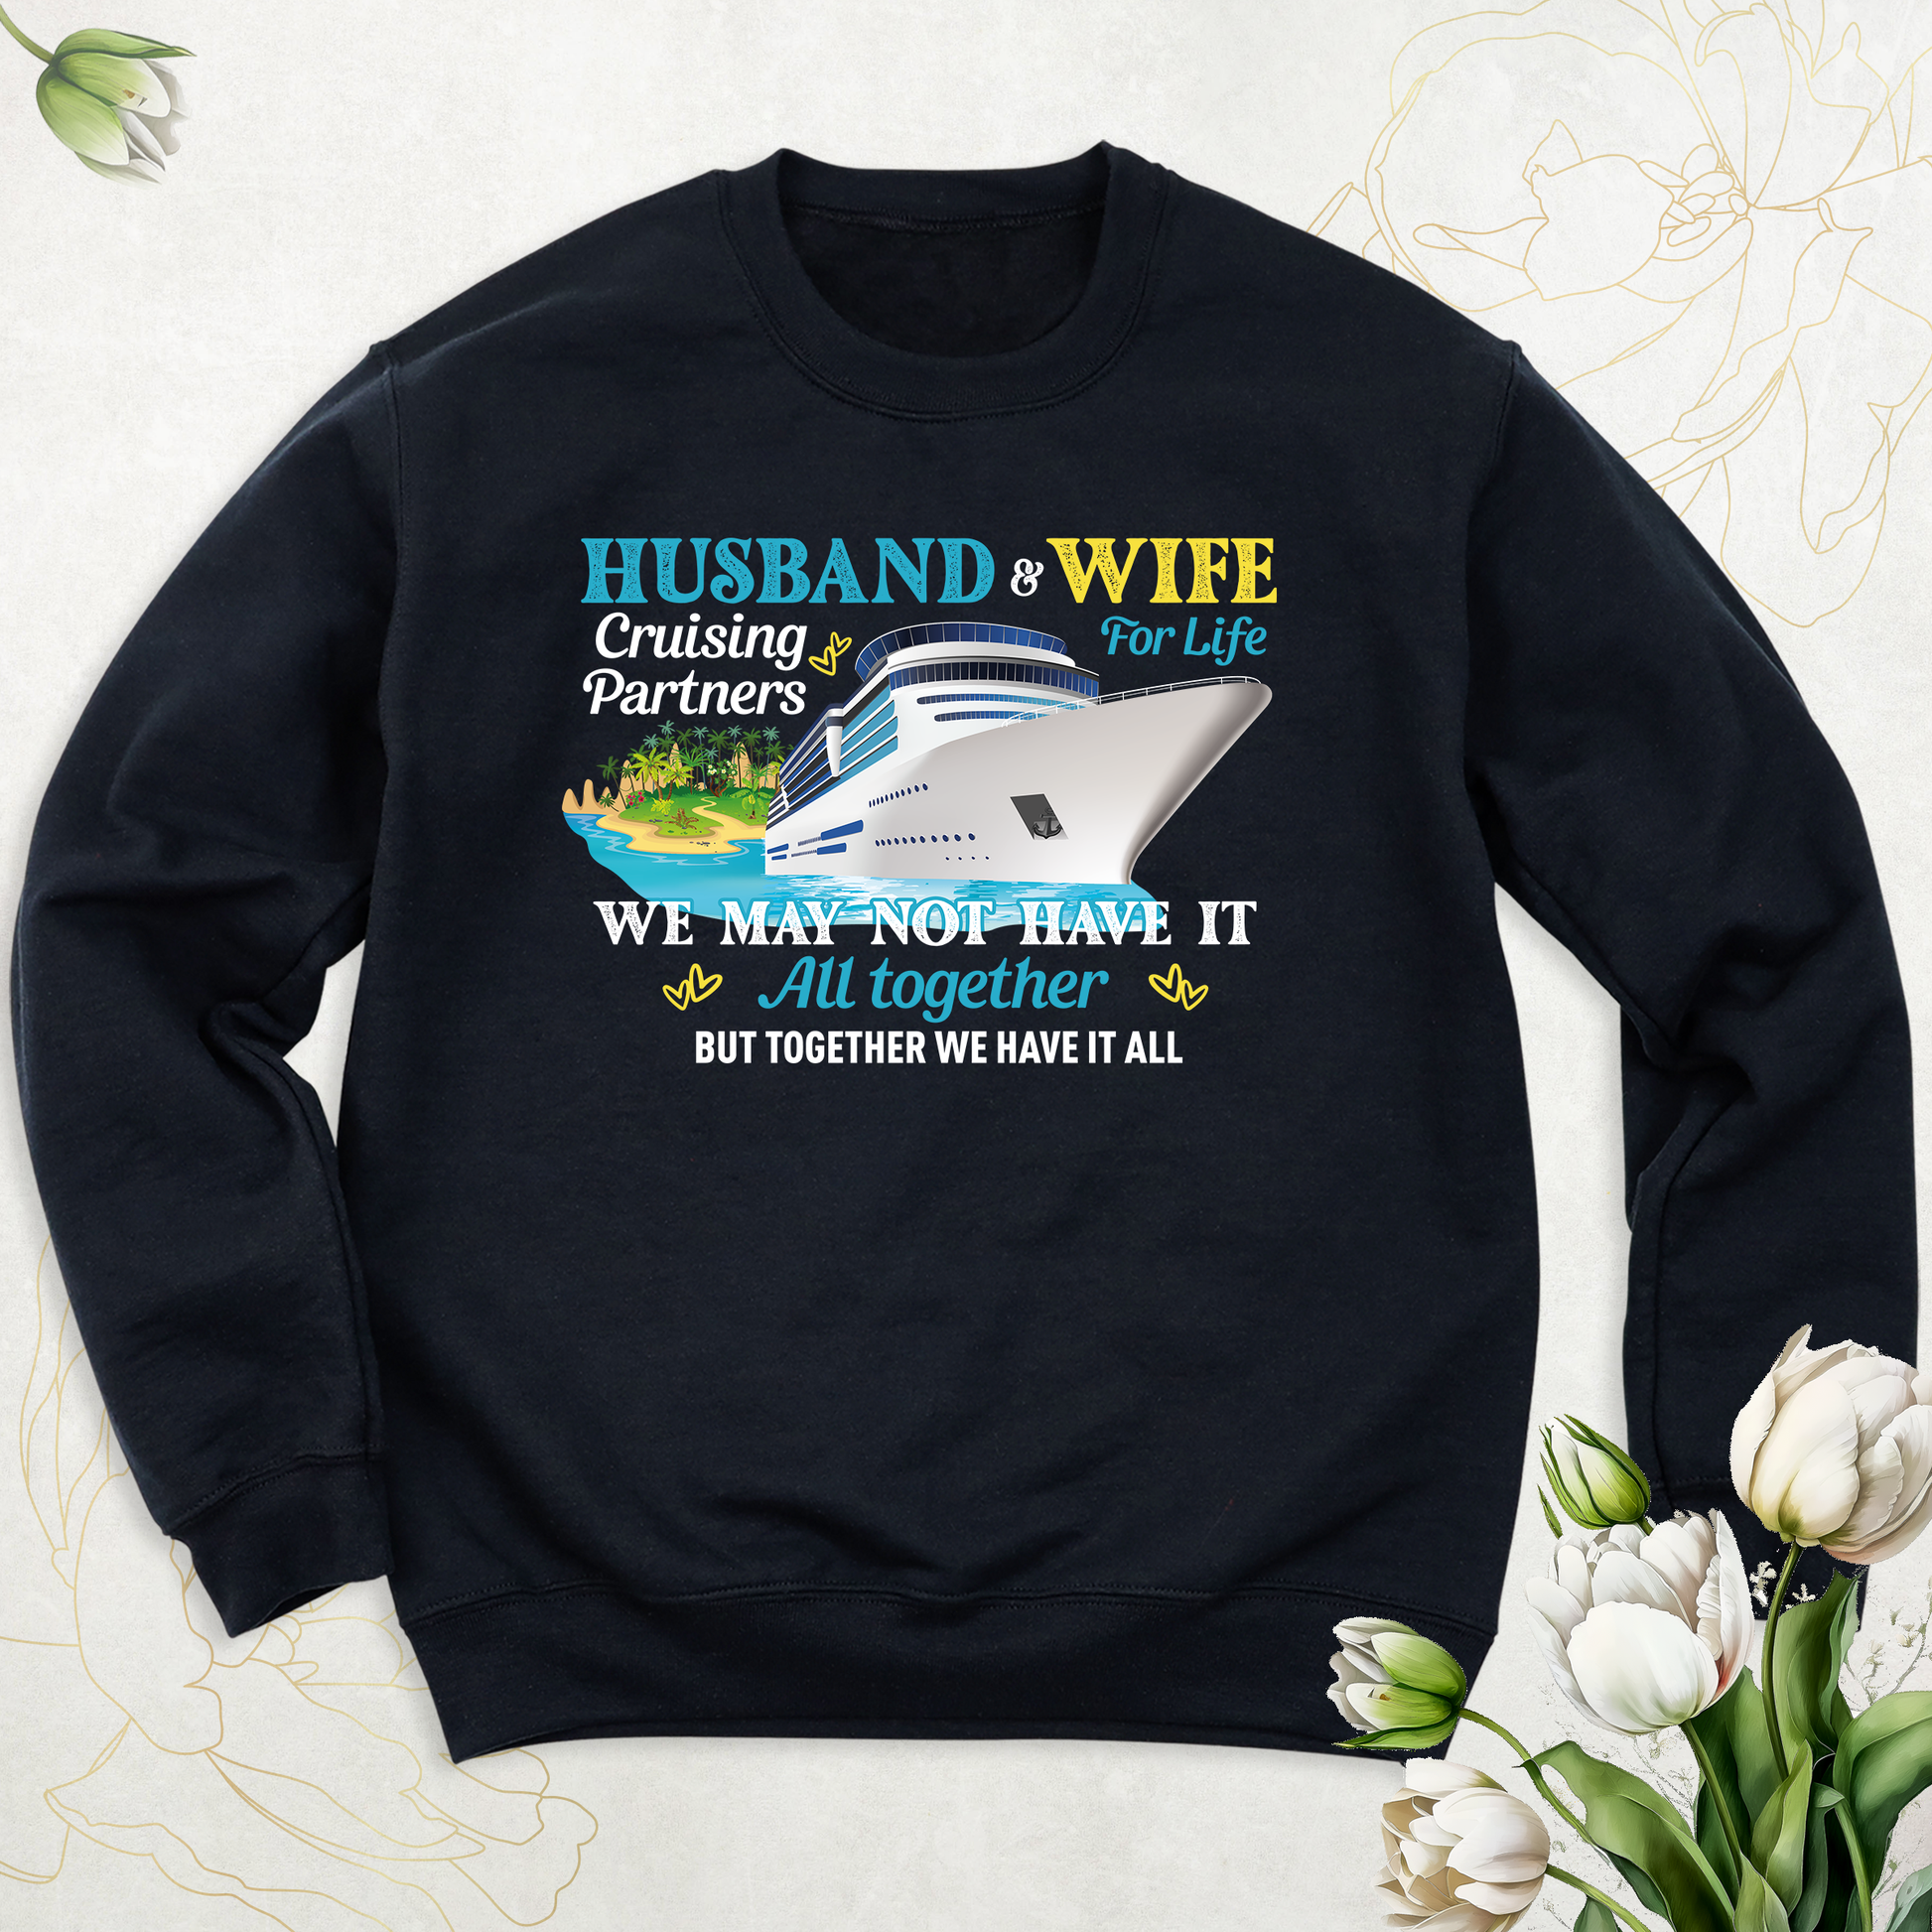 husband and wife shirts